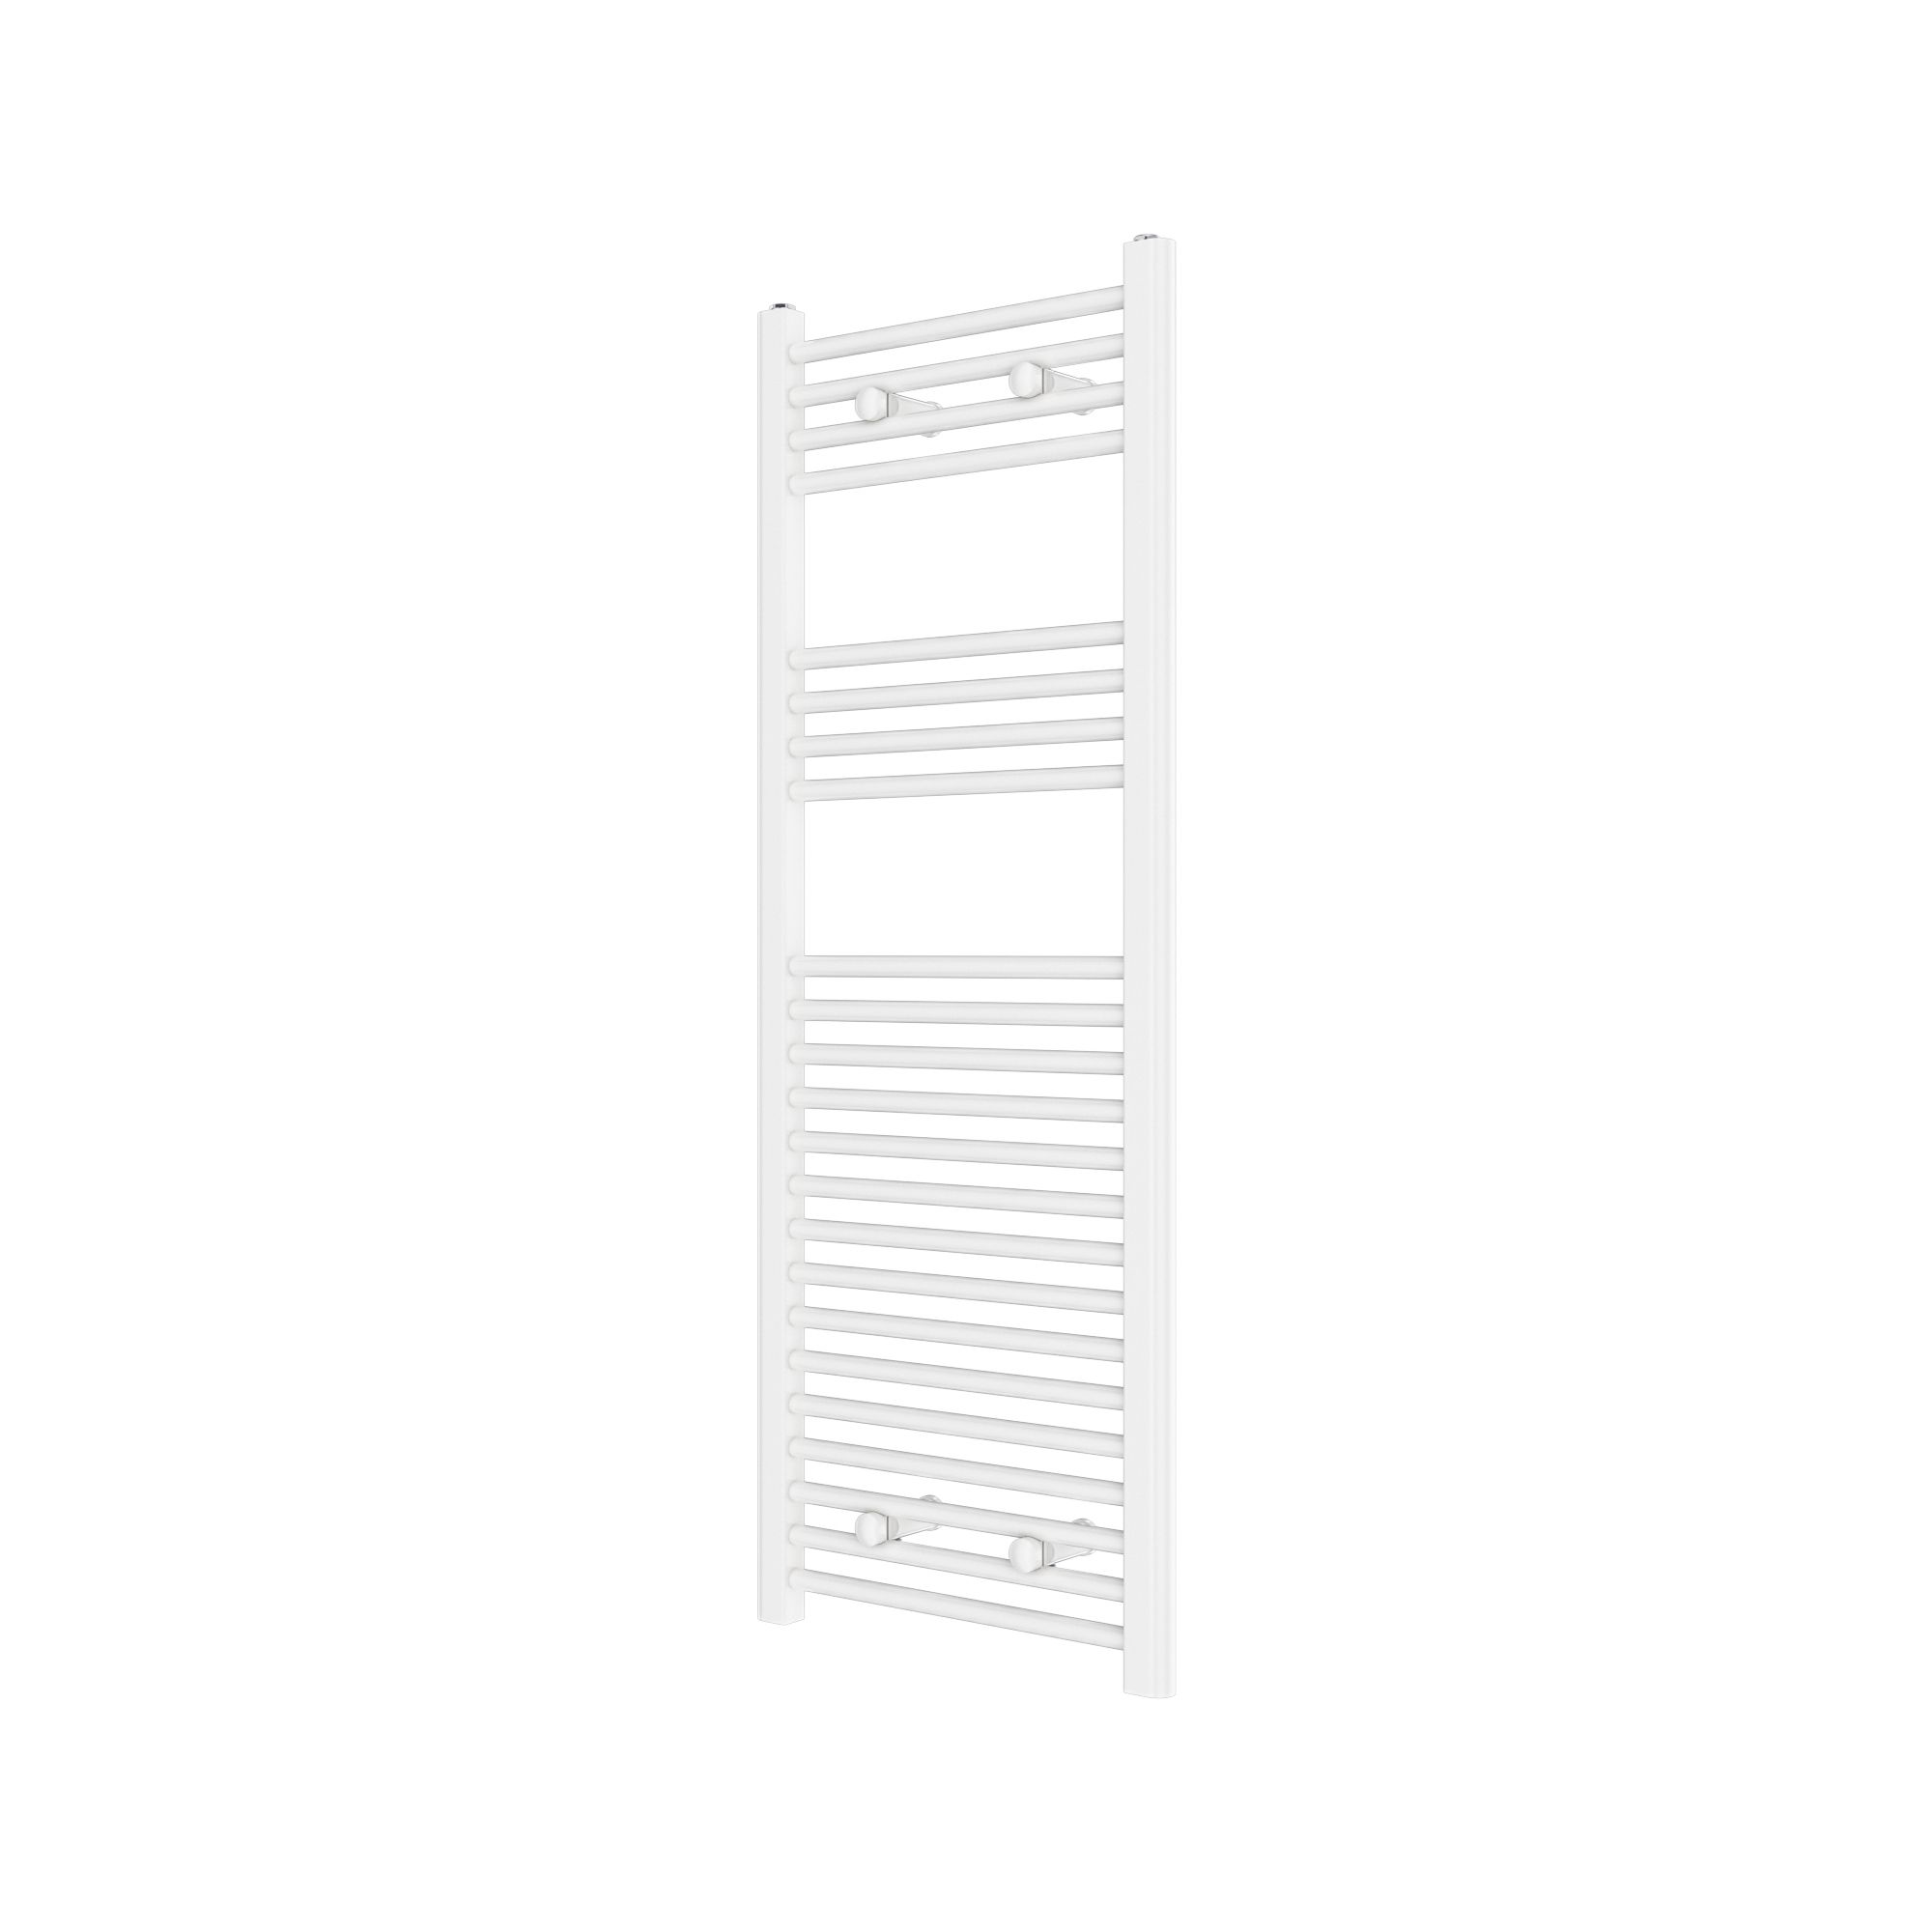 Flomasta Flat, White Vertical Flat Towel radiator (W)450mm x (H)1200mm